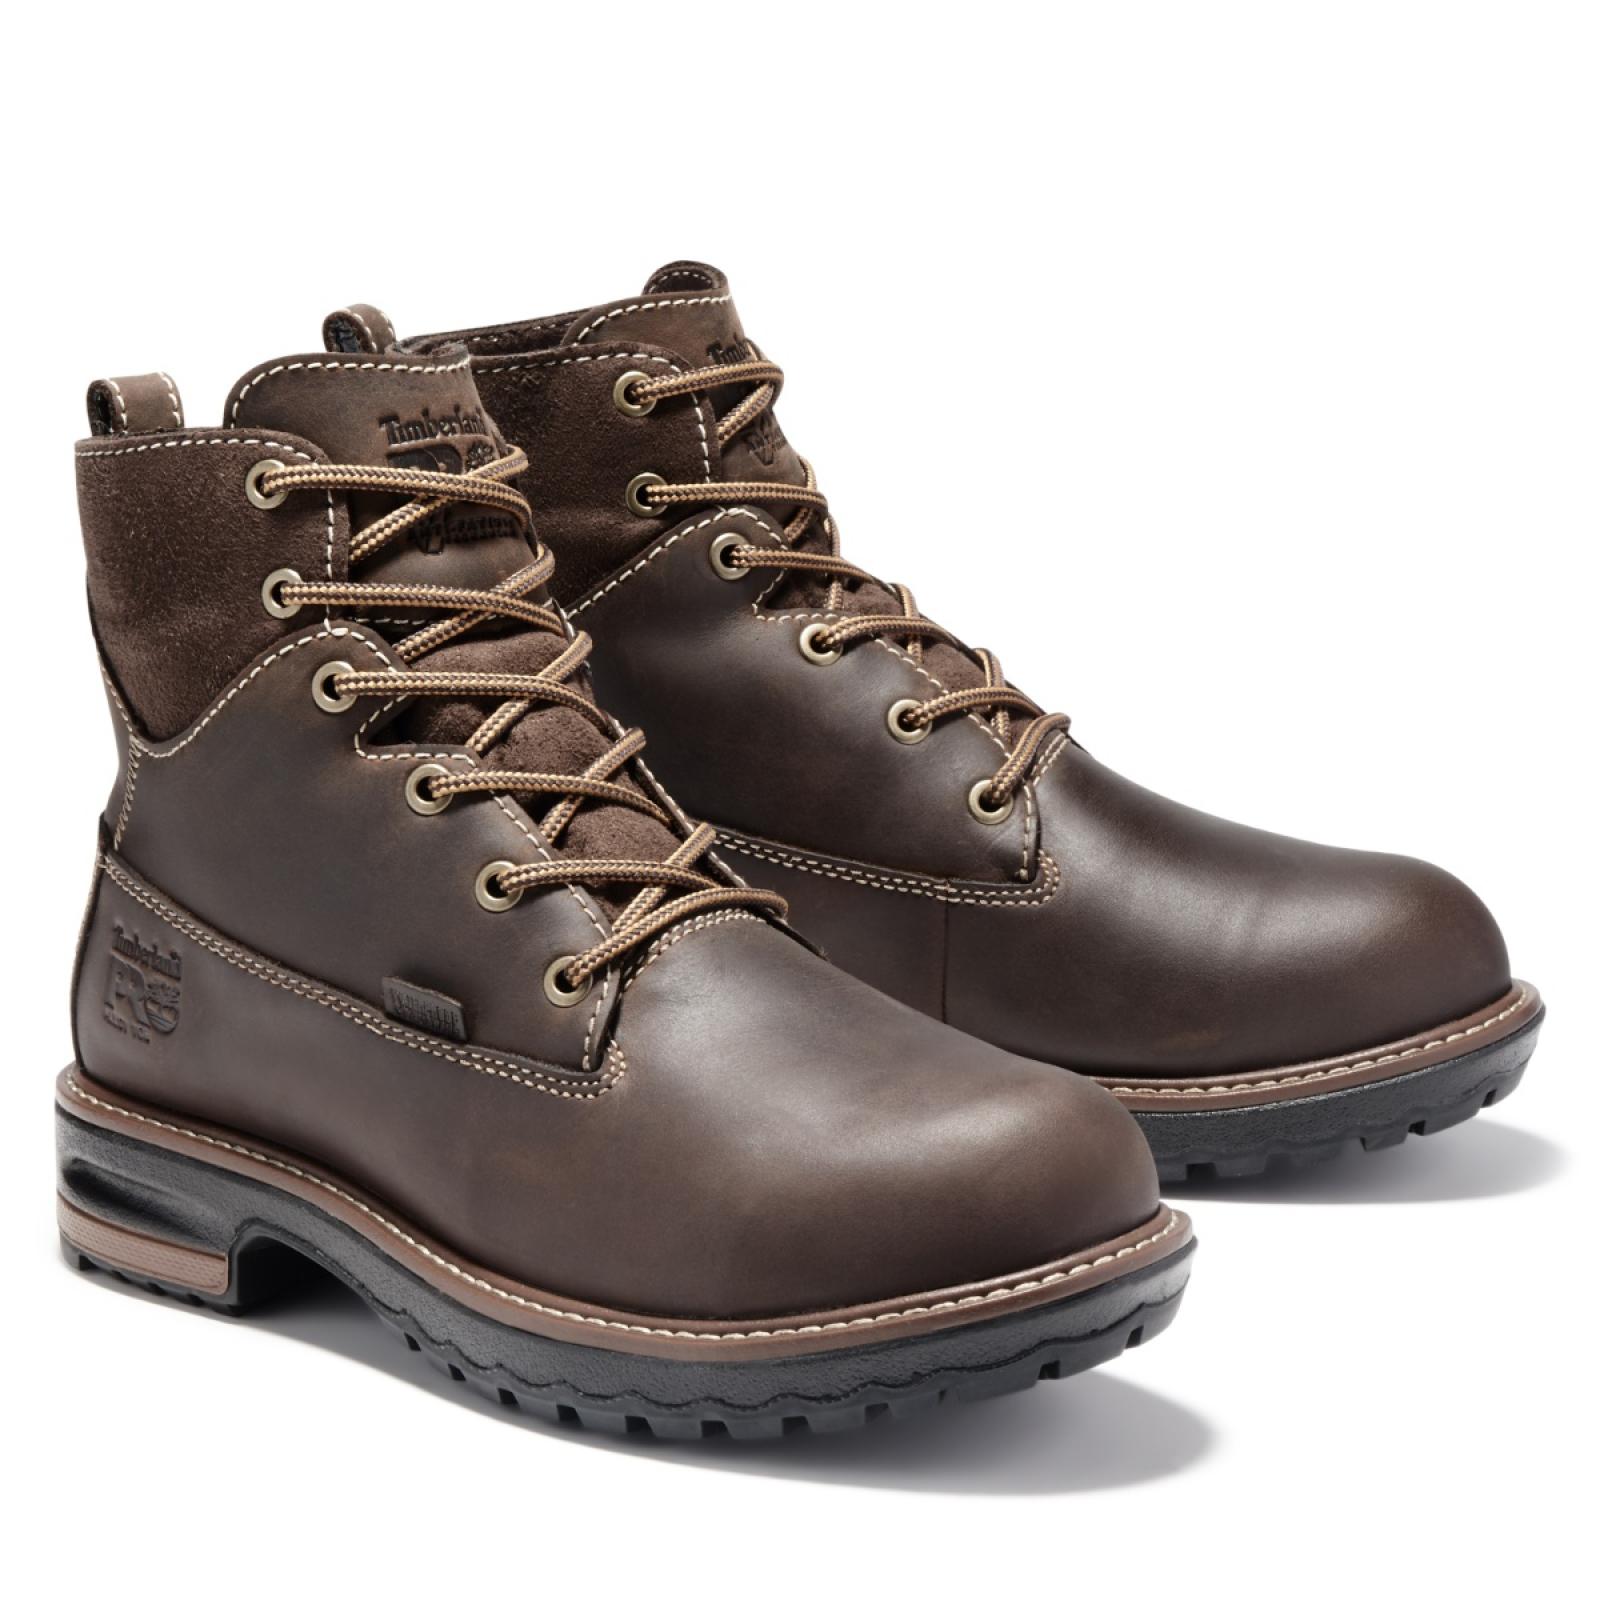 Timberland PRO Women's Hightower 6” Alloy Toe Work Boots